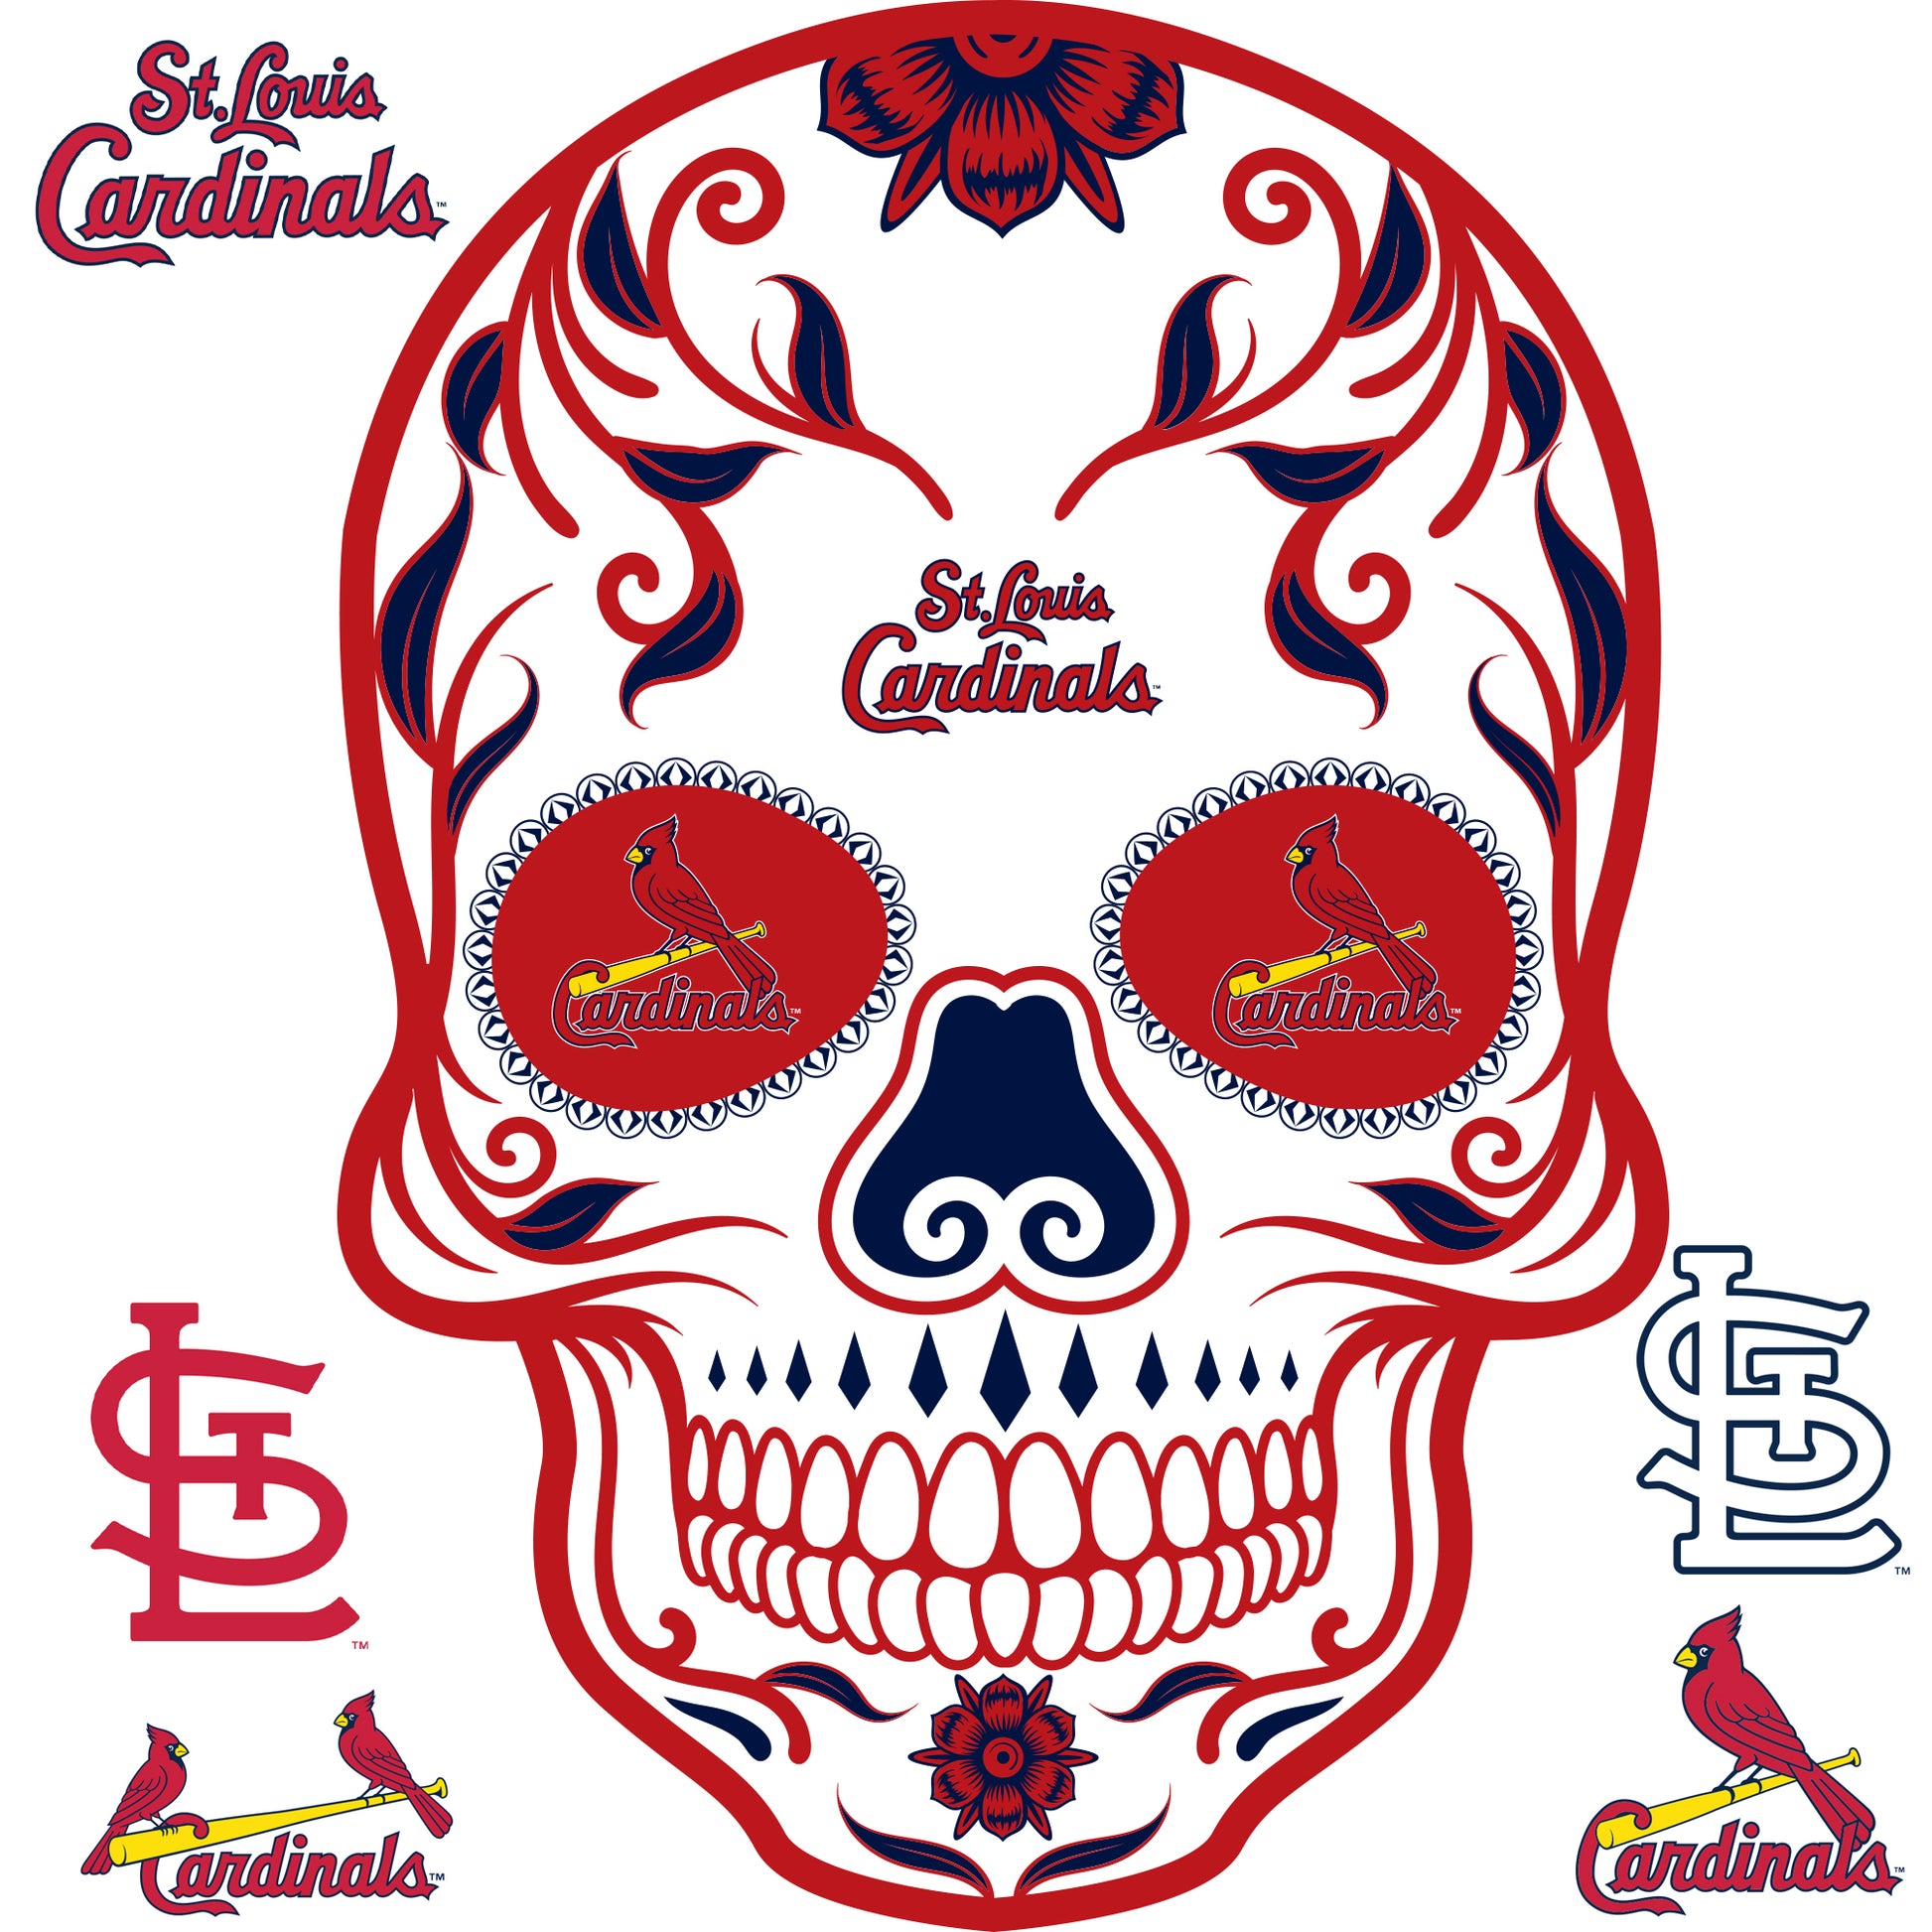 St. Louis Cardinals on X: Want a custom Cardinals jersey? Send us